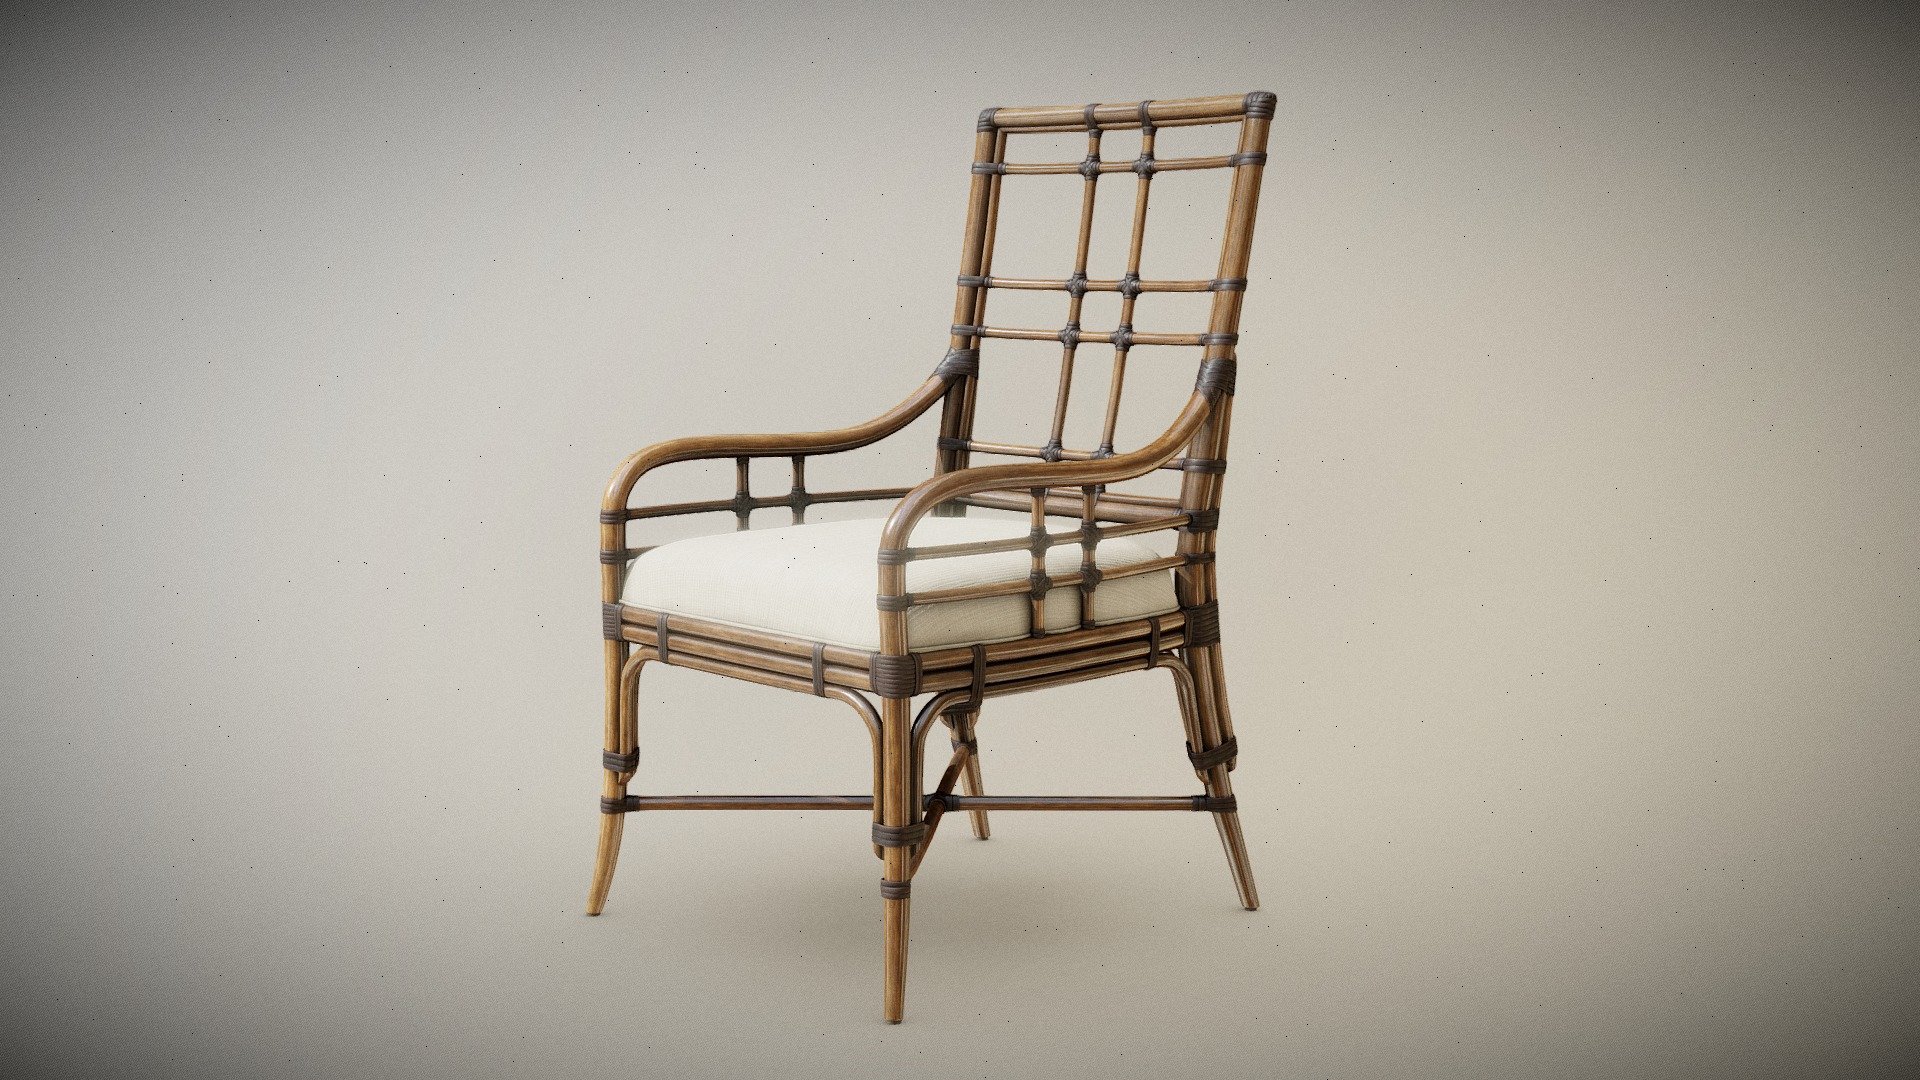 Seaview Arm Chair designed by LEXINGTON
Reference: https://www.lexington.com/seaview-arm-chair

Made for Intiaro: https://en.intiaro.com/ - Seaview Arm Chair - 3D model by Mateusz Kołakowski (@geppettoo) 3d model